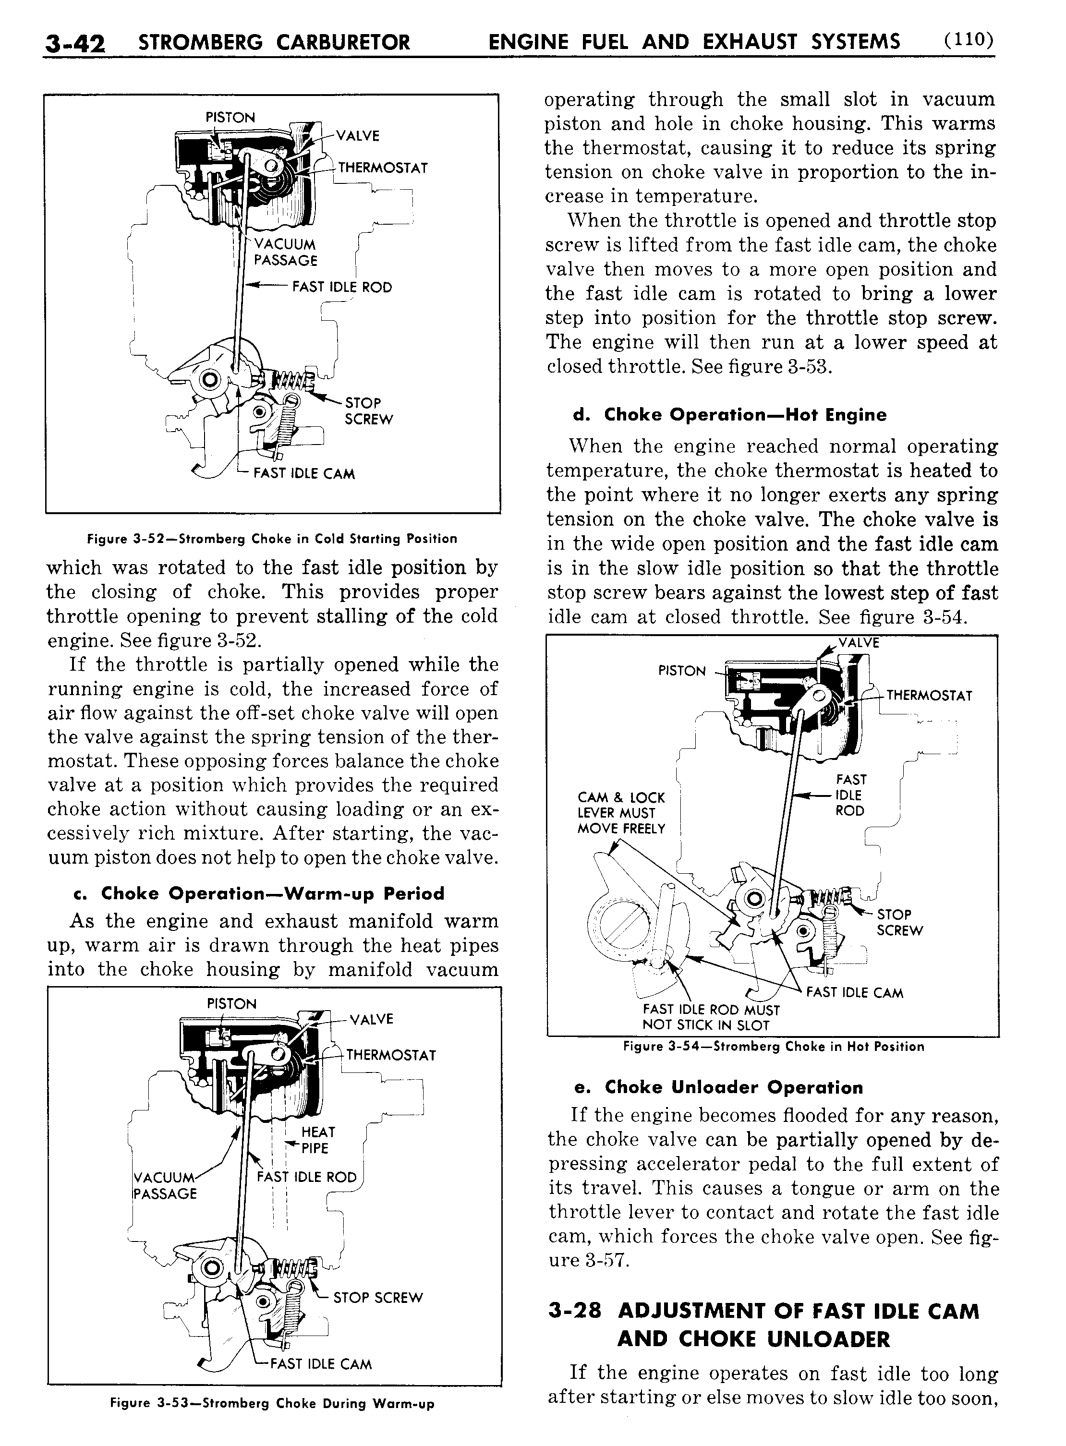 n_04 1951 Buick Shop Manual - Engine Fuel & Exhaust-042-042.jpg